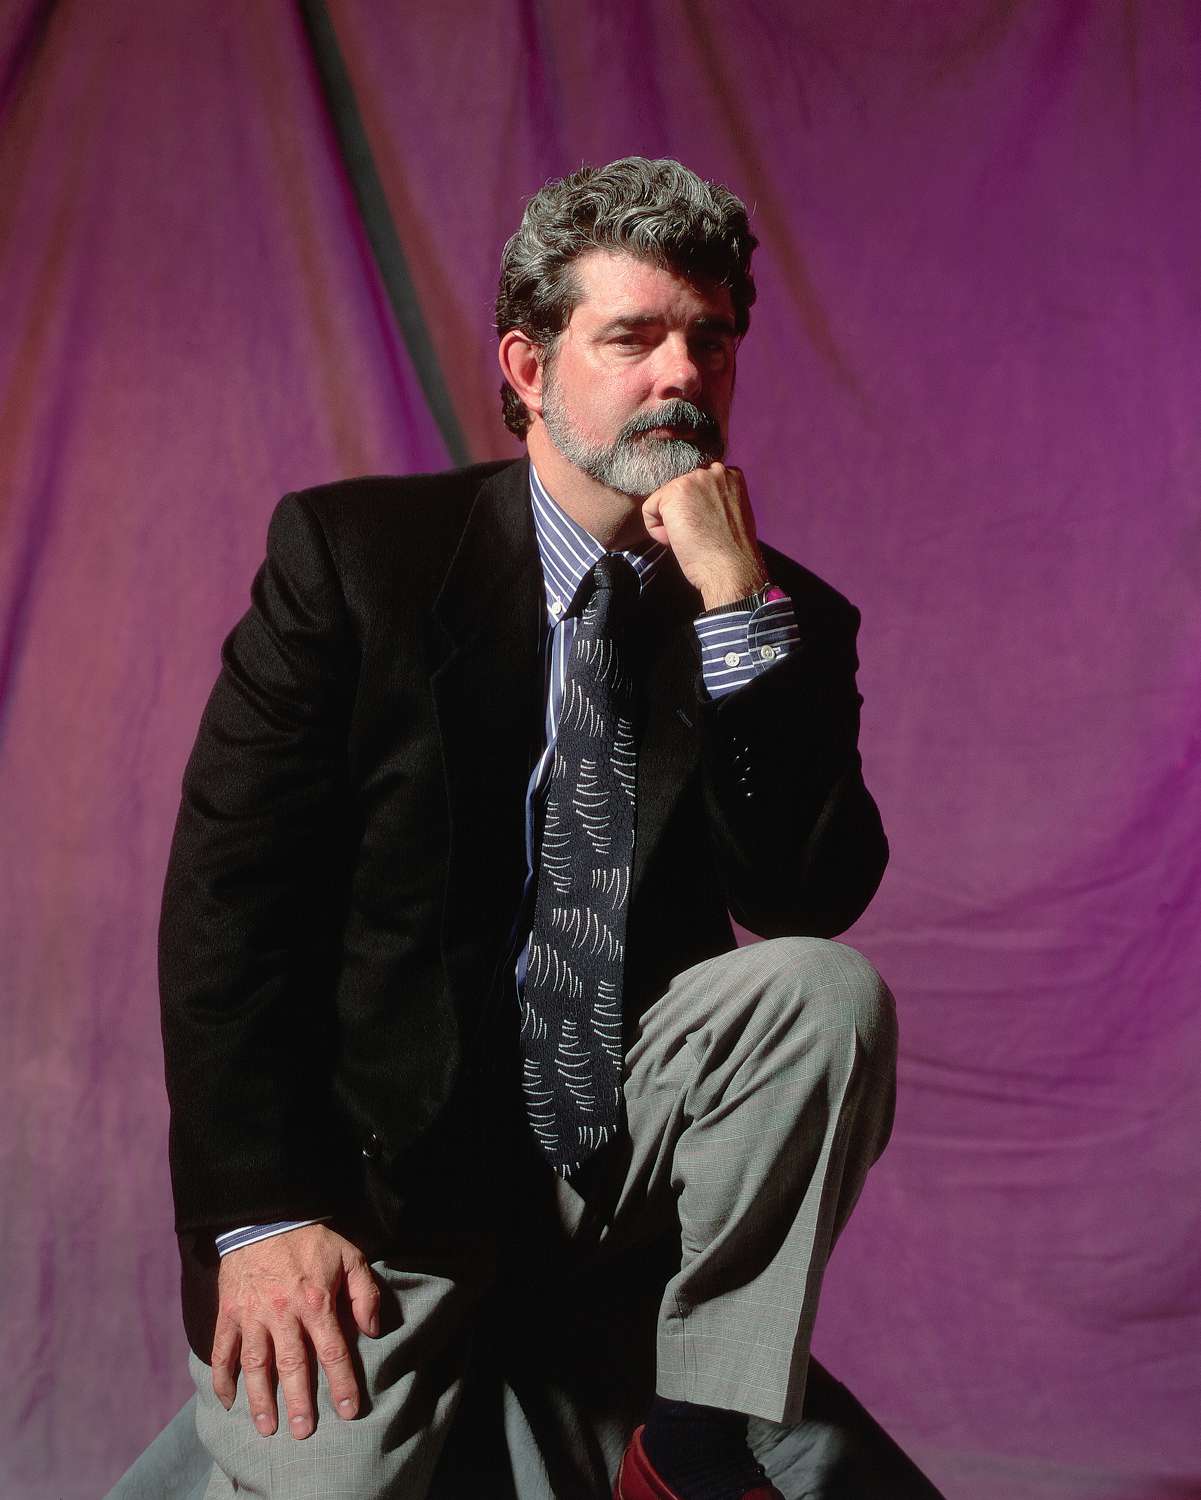 George Lucas' Life in Photos